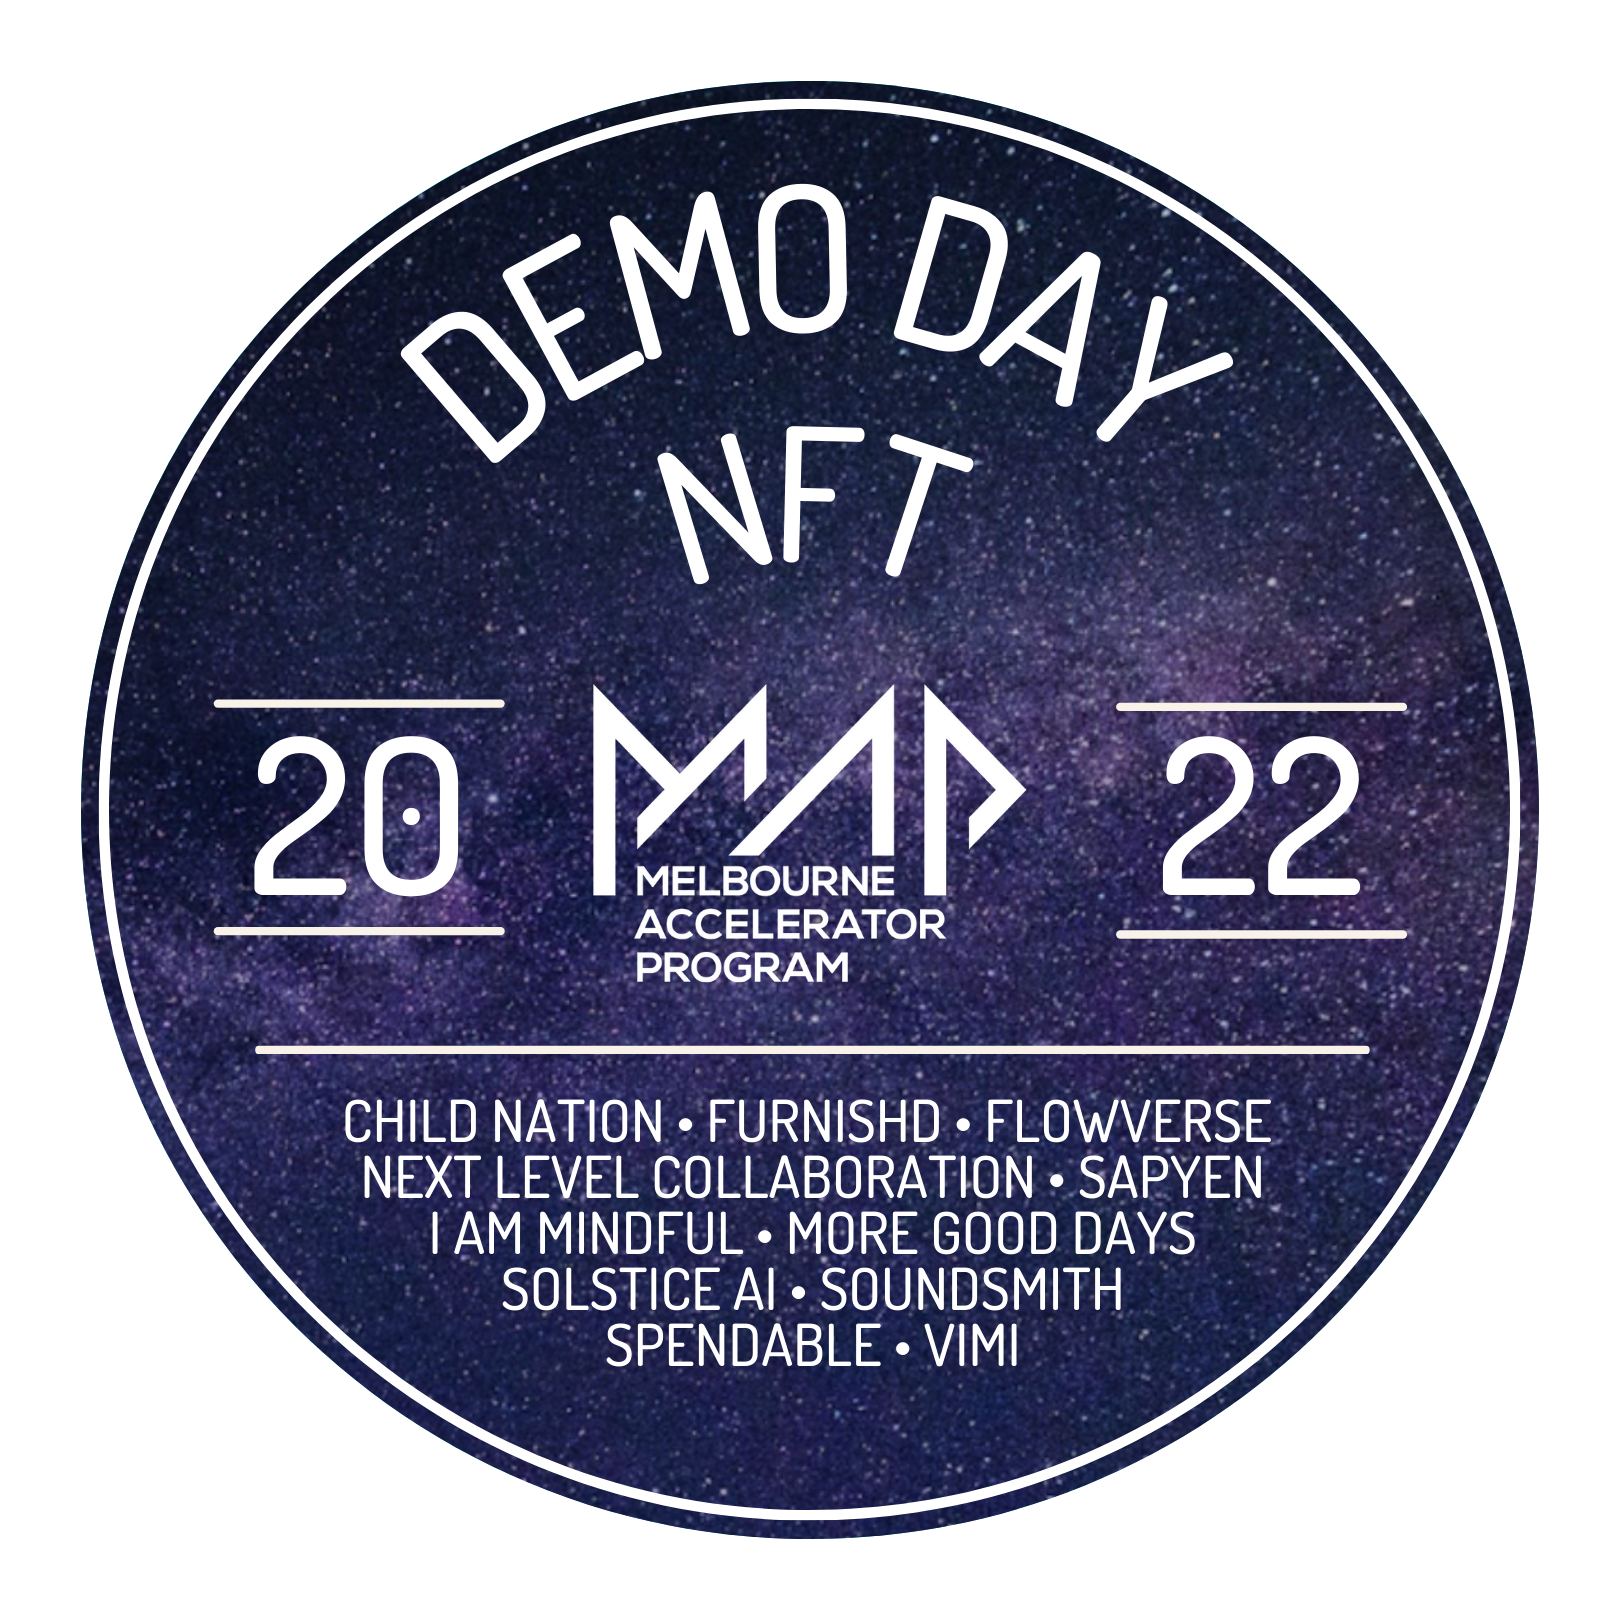 Demo Day NFT asset